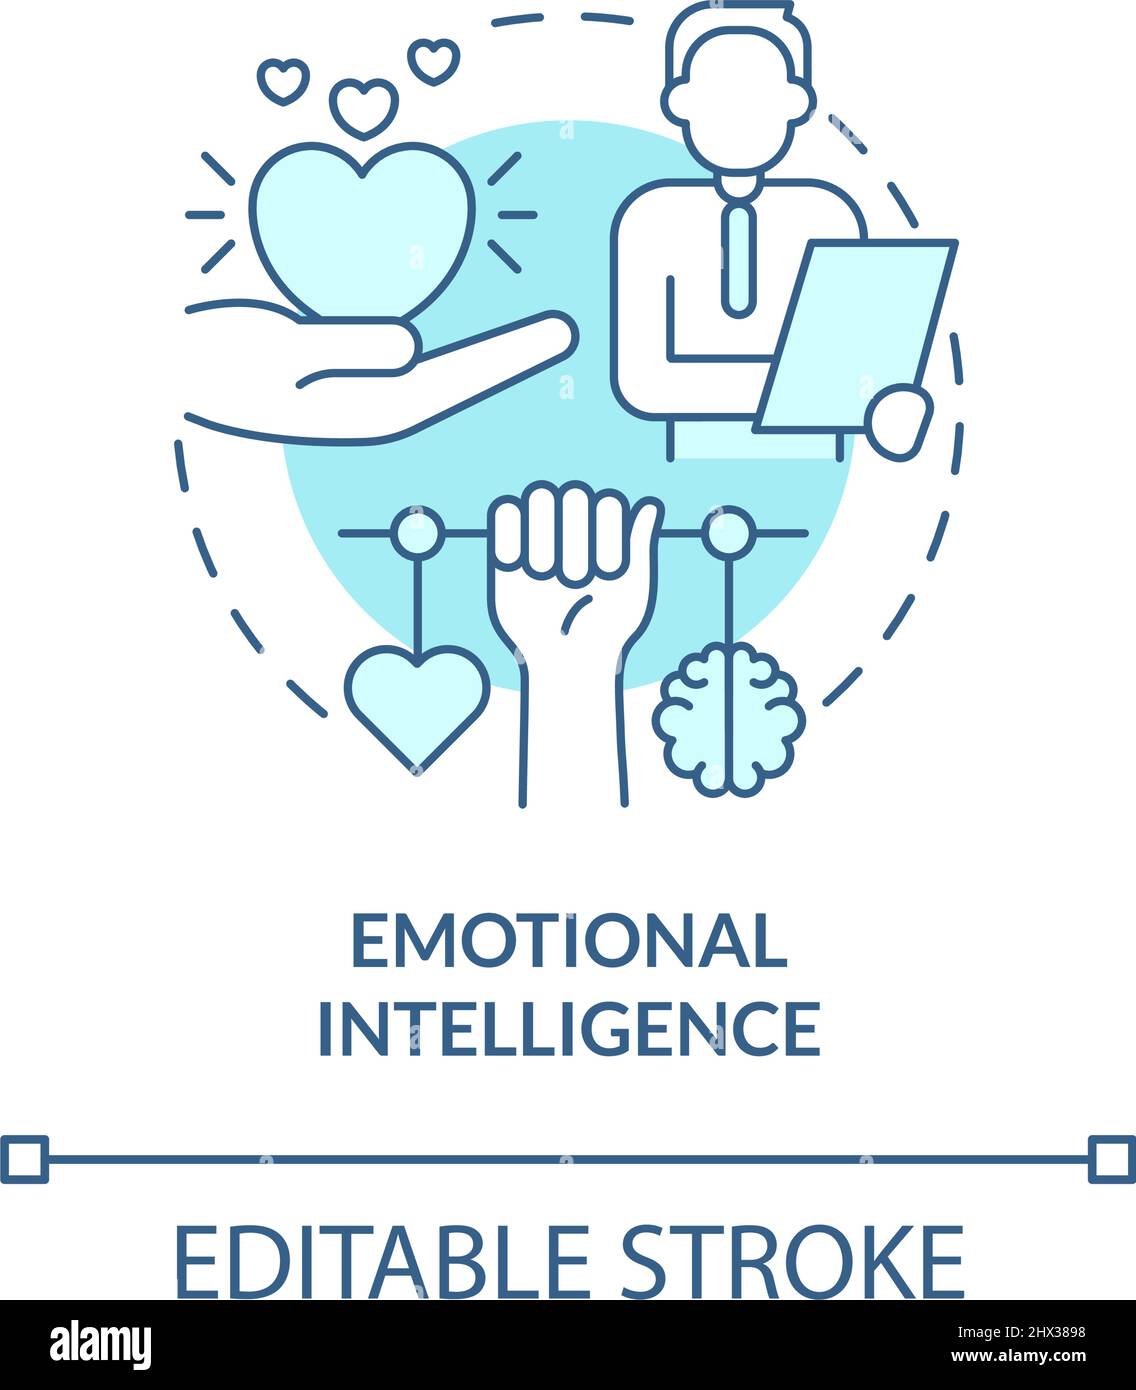 Emotional intelligence turquoise concept icon Stock Vector Image & Art ...